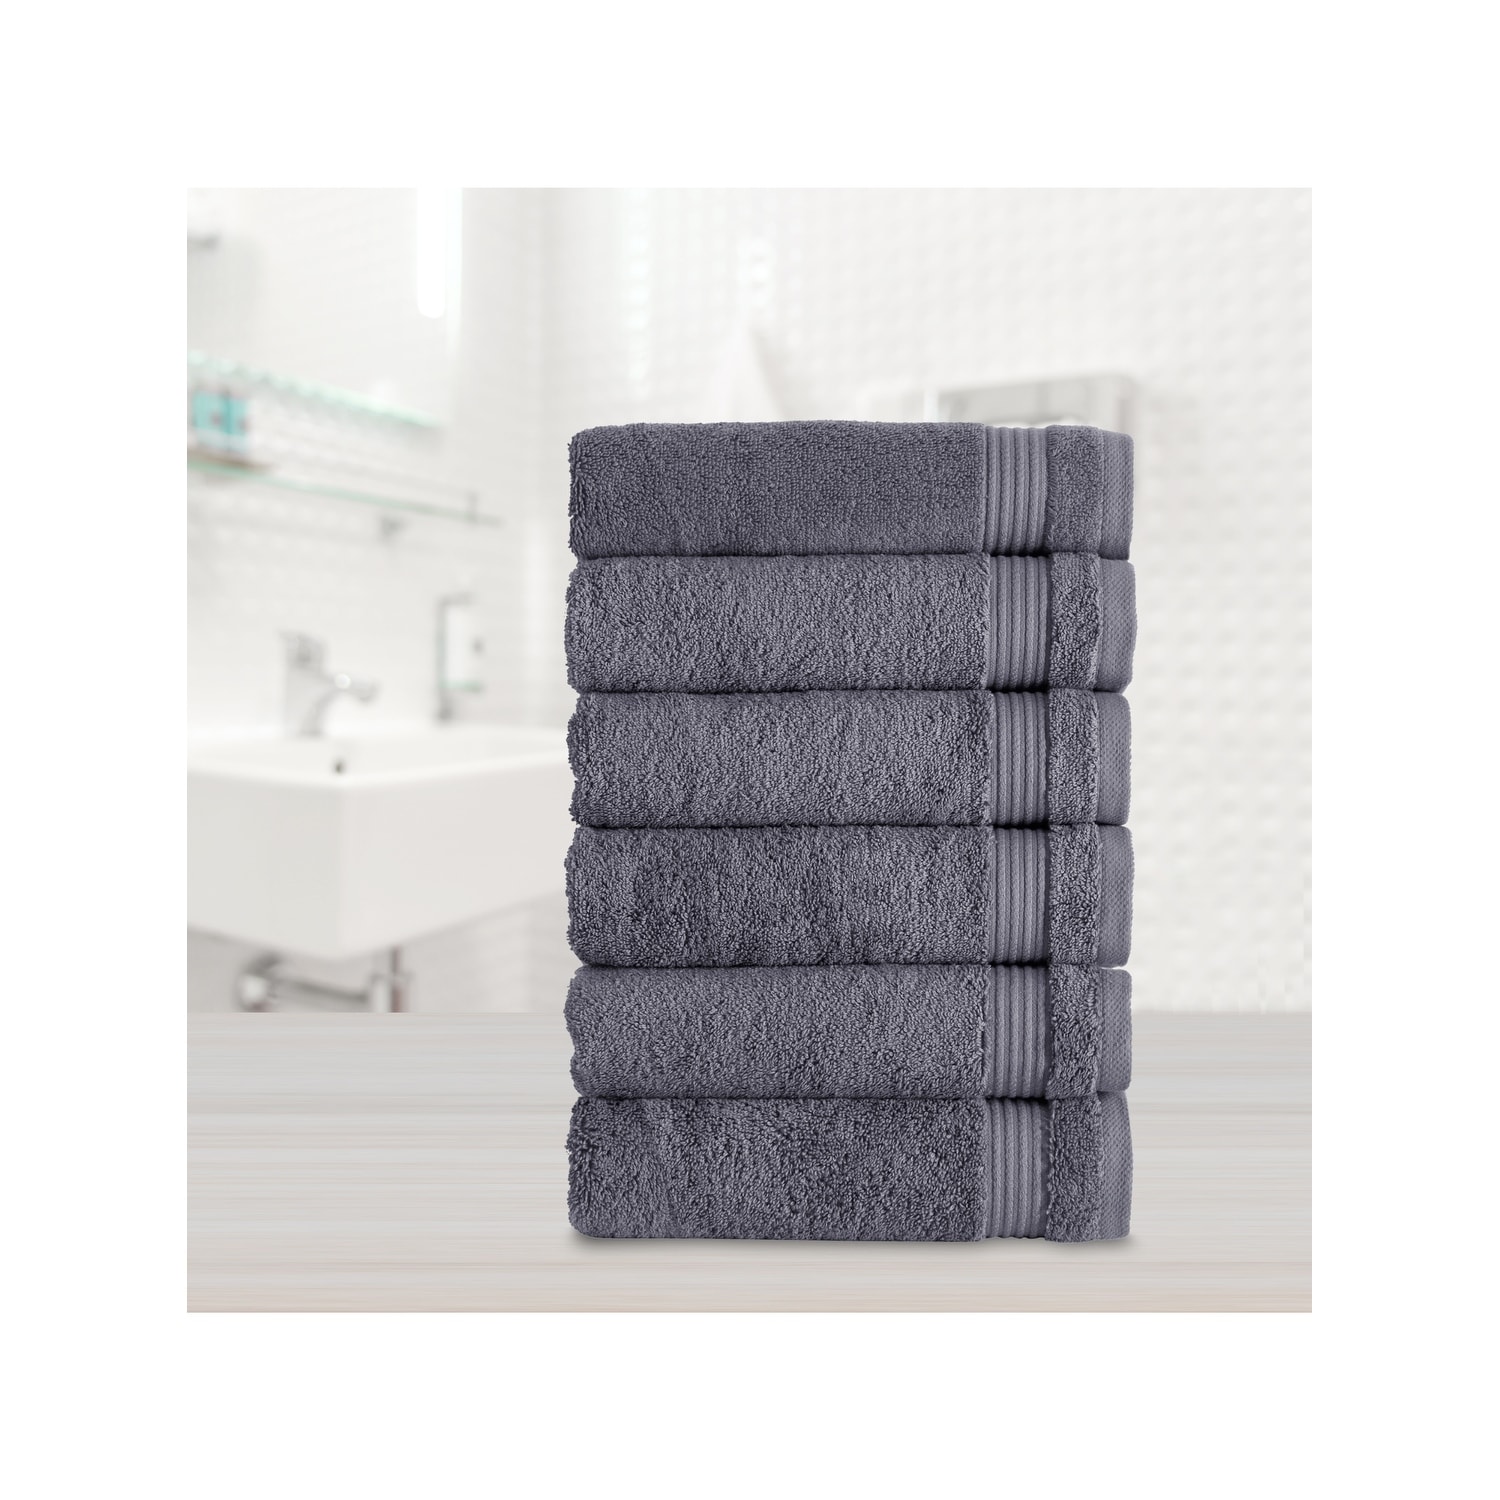 Classic Turkish Towel s Plush Ribbed Cotton Luxurious Bath Sheets (Set of  3) 40x65 - 40x65 Grey